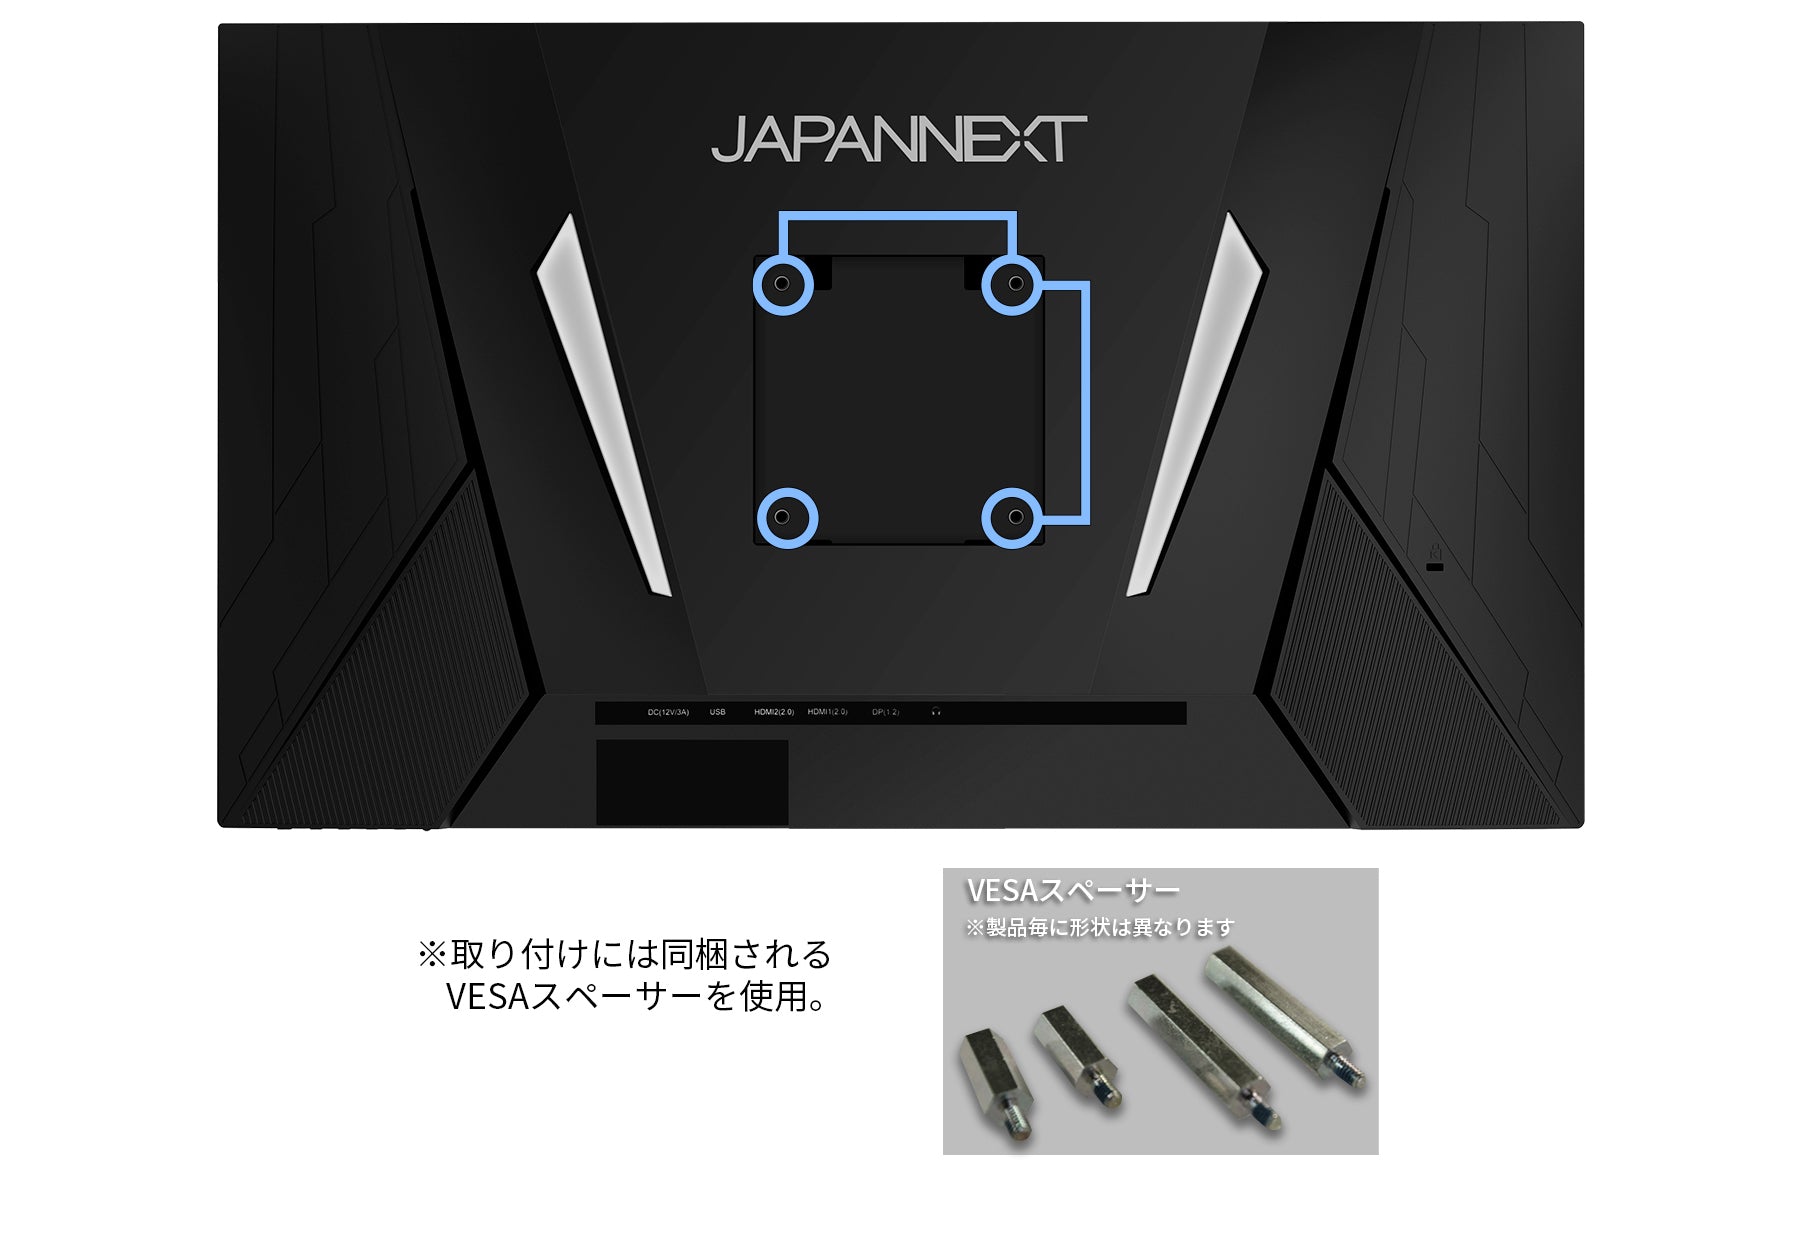 JAPANNEXT 24.5インチ VAパネル搭載 240Hz対応 フルHD(1920x1080 